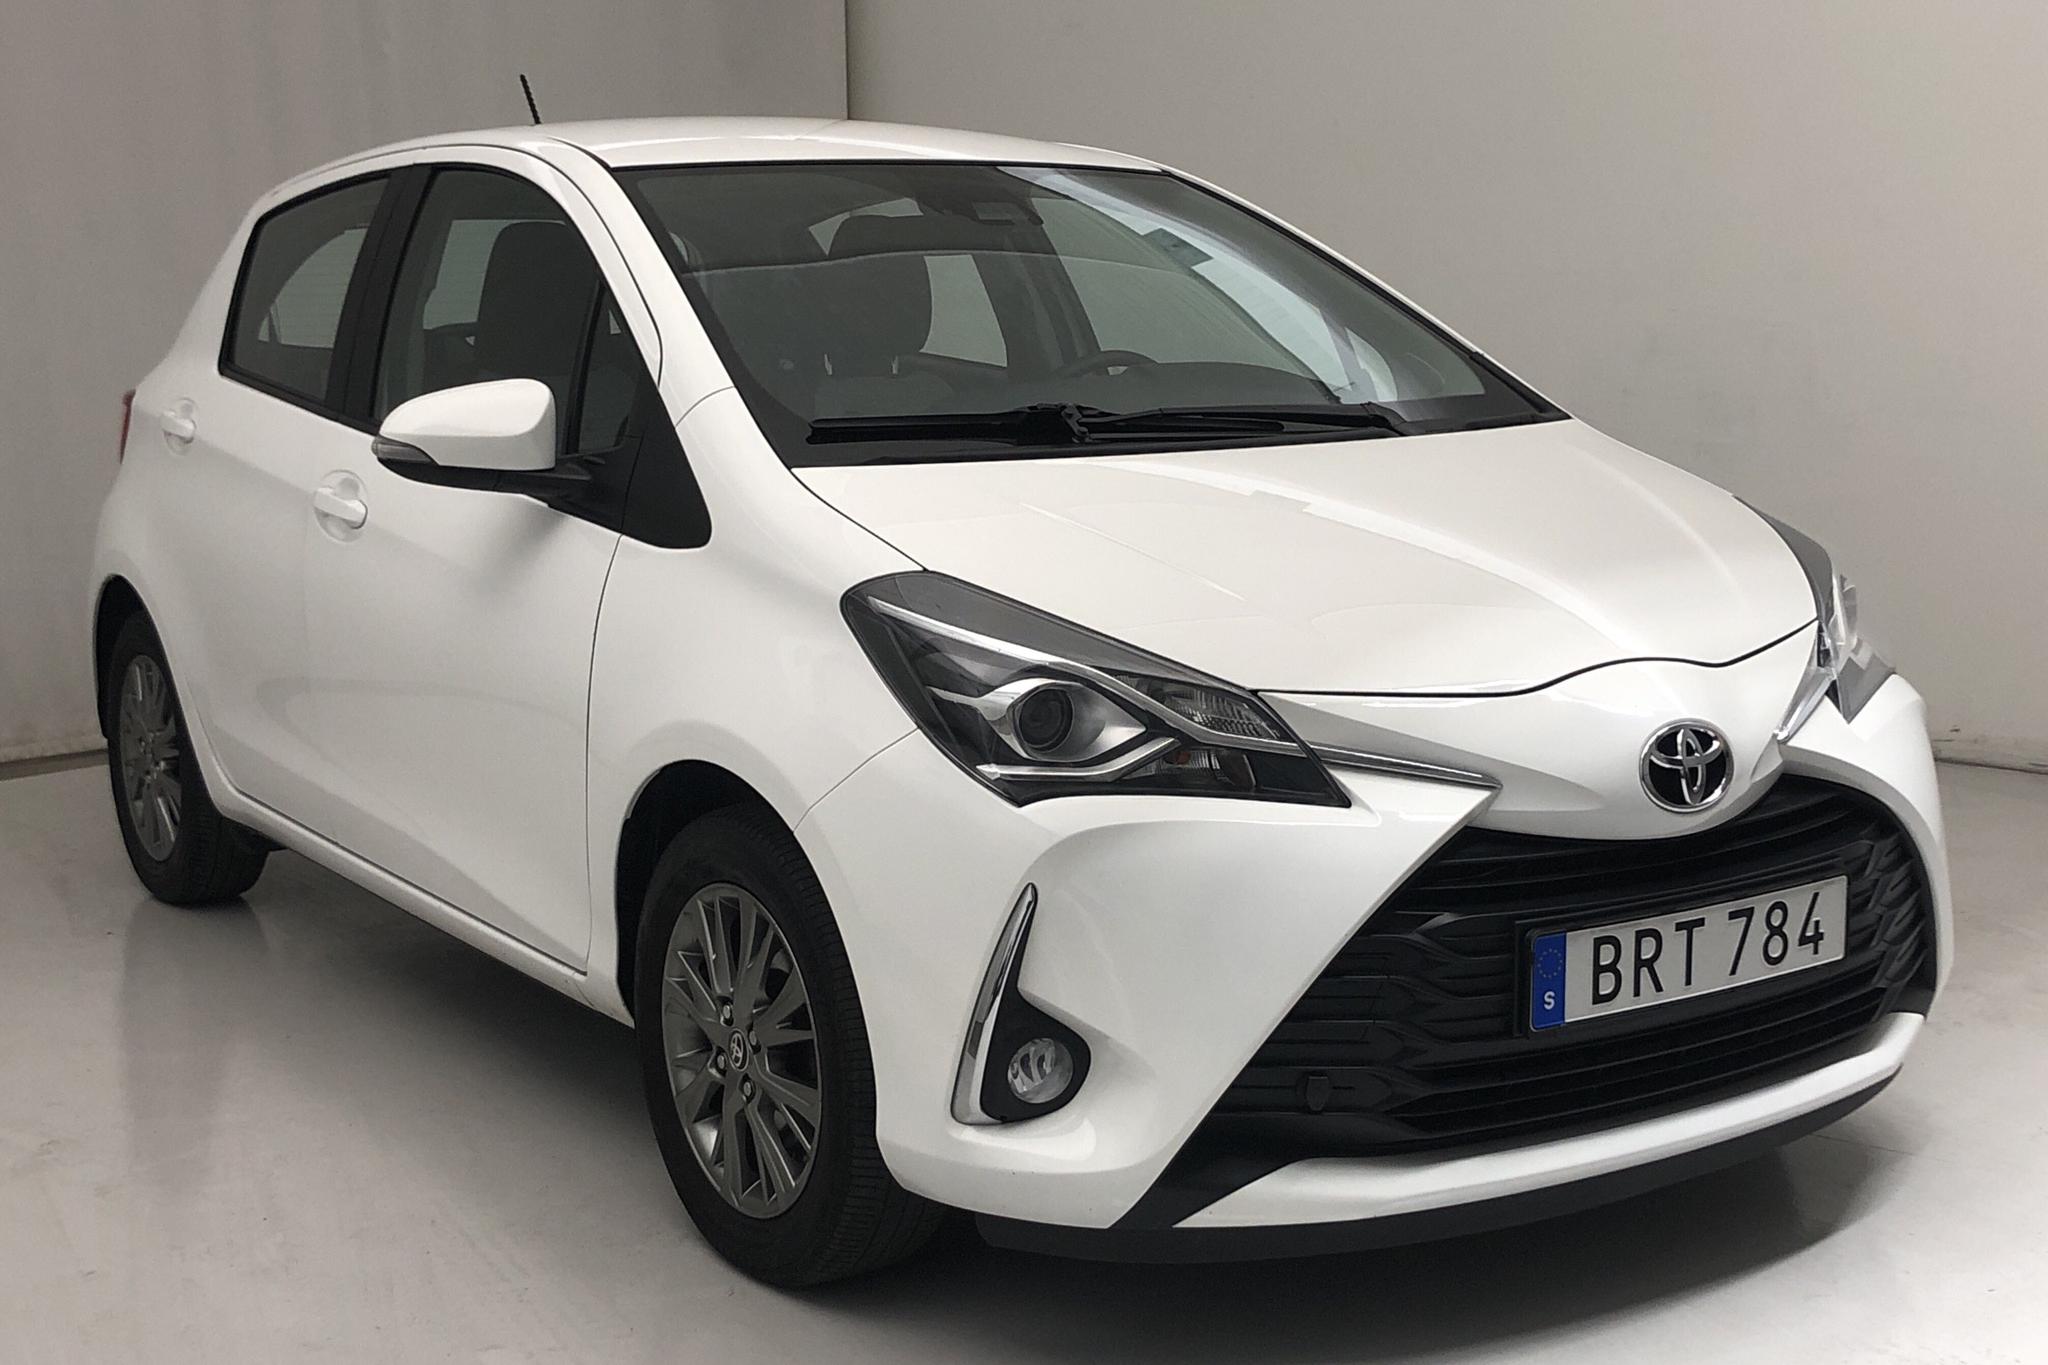 Toyota Yaris 1.5 5dr (111hk) - 59 440 km - Manual - white - 2019